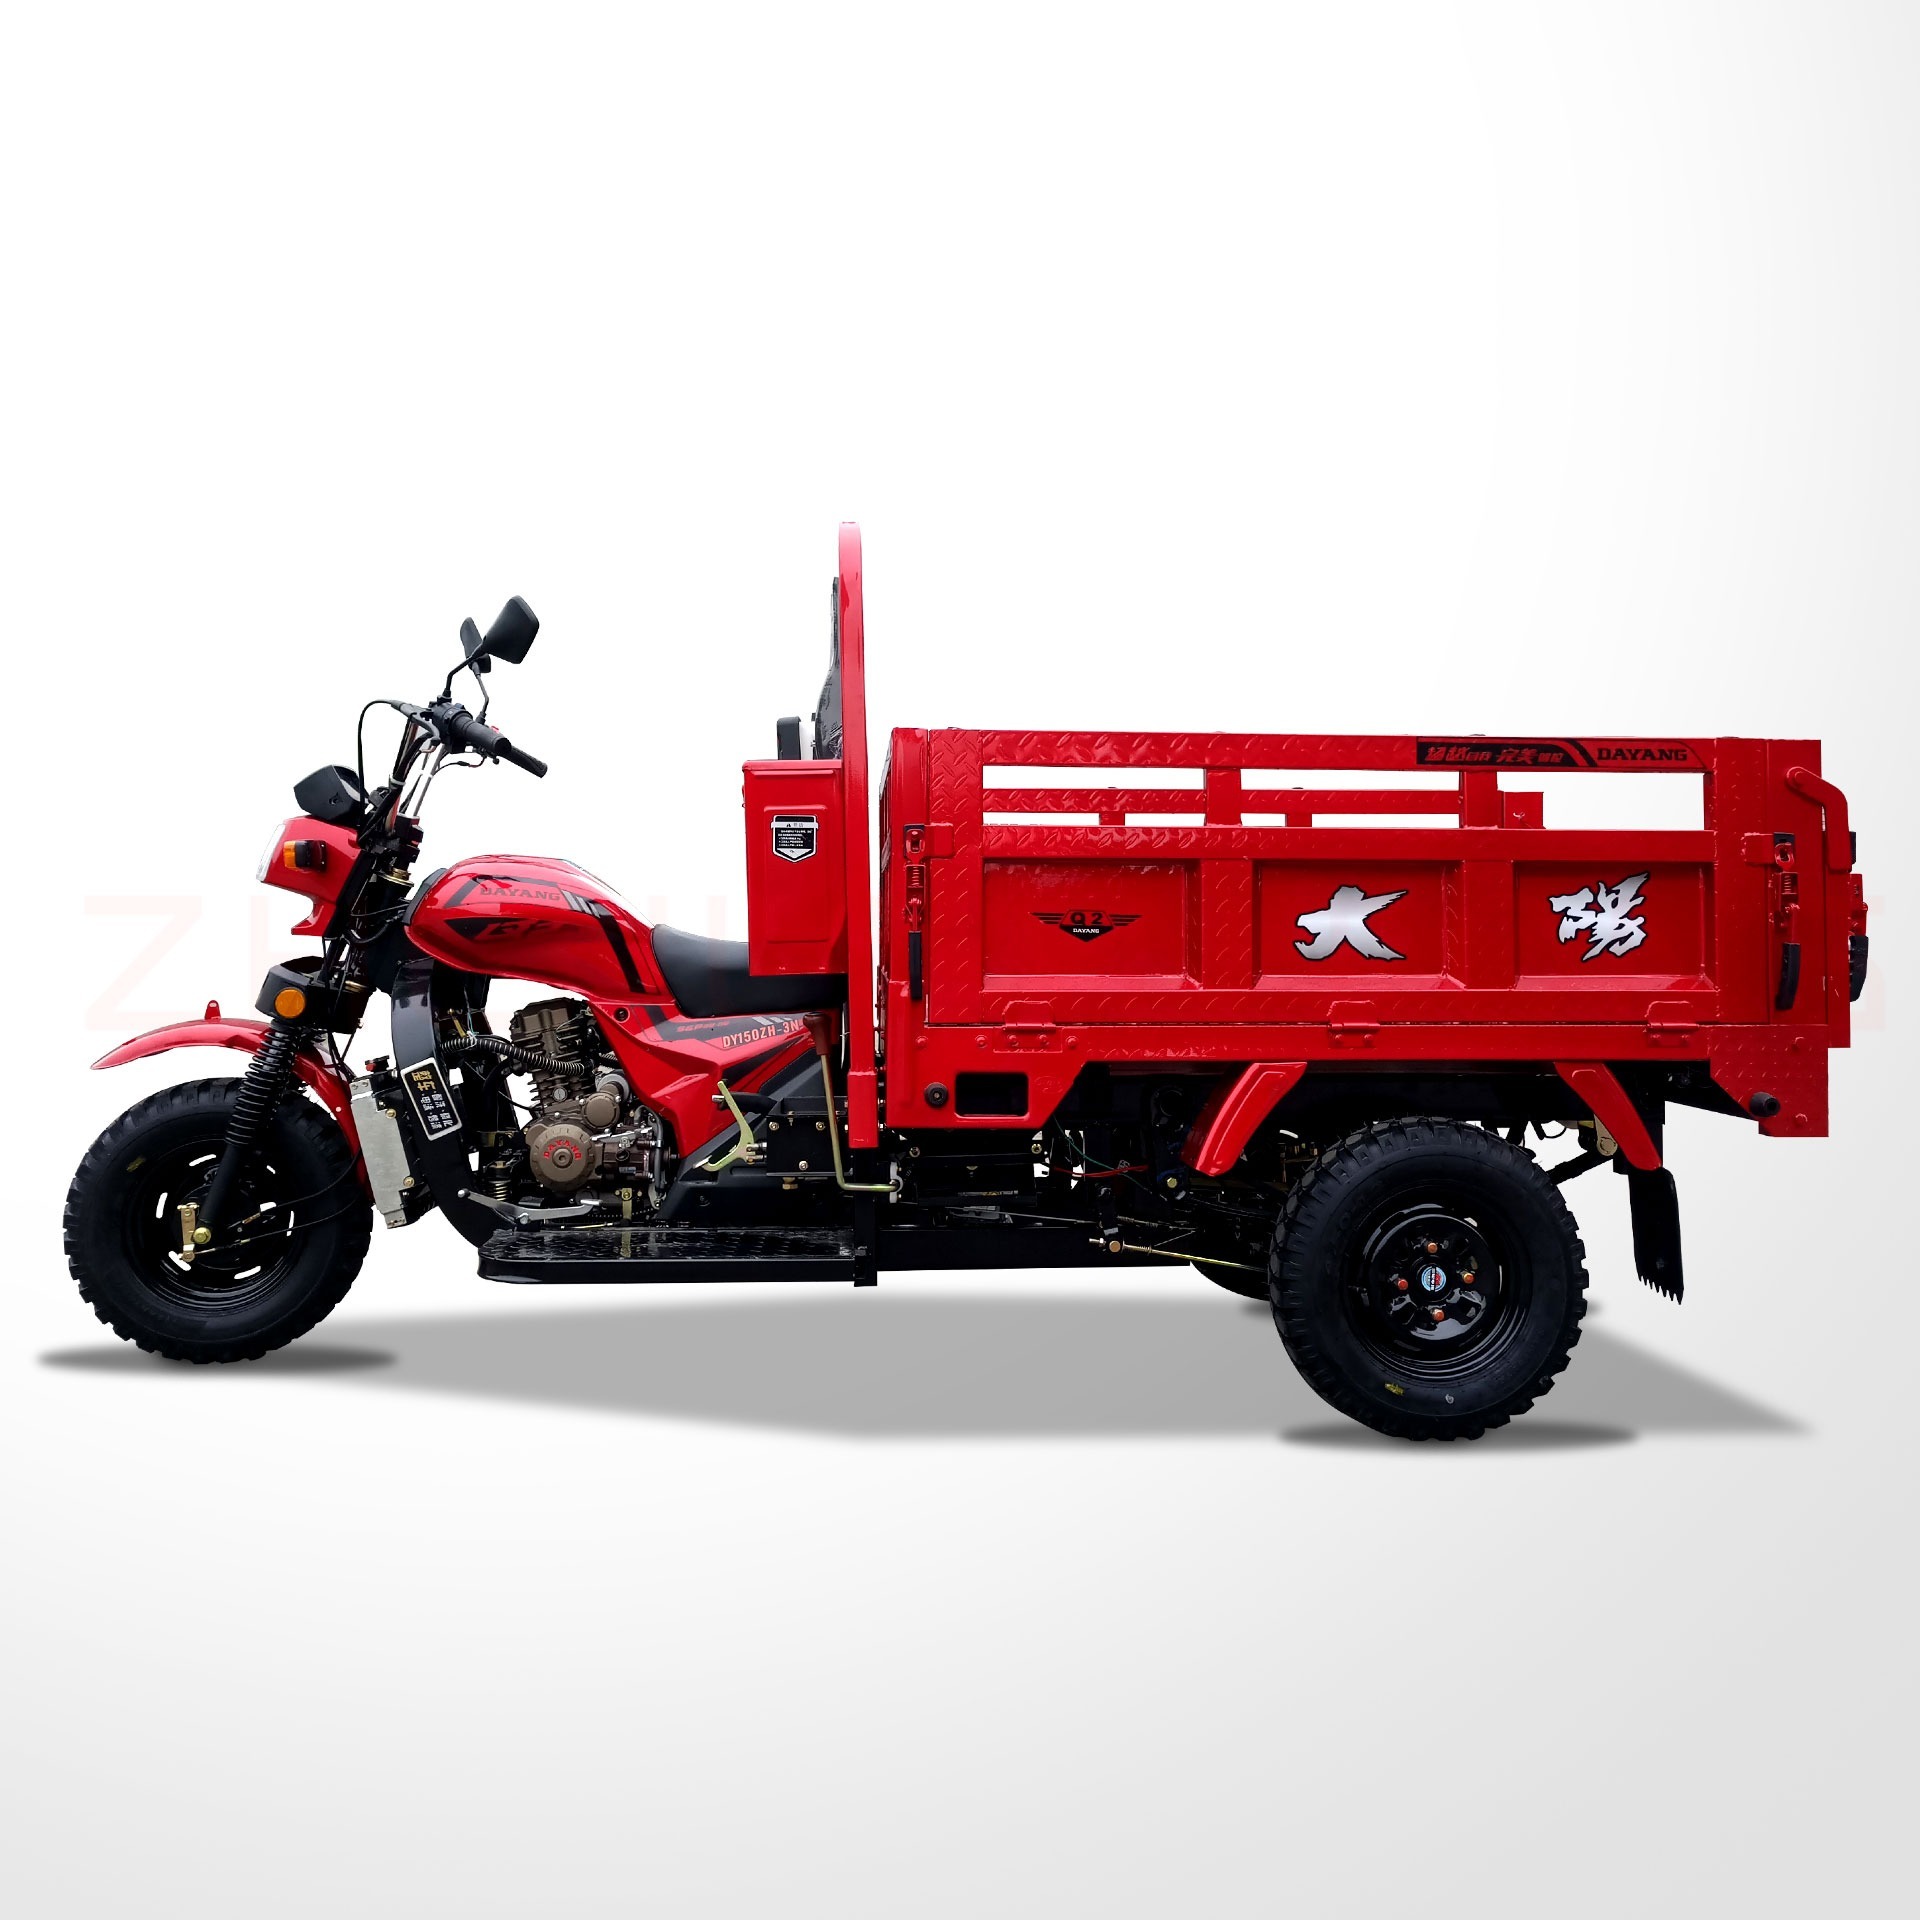 Dump 200CC Cargo Motor Tricycle